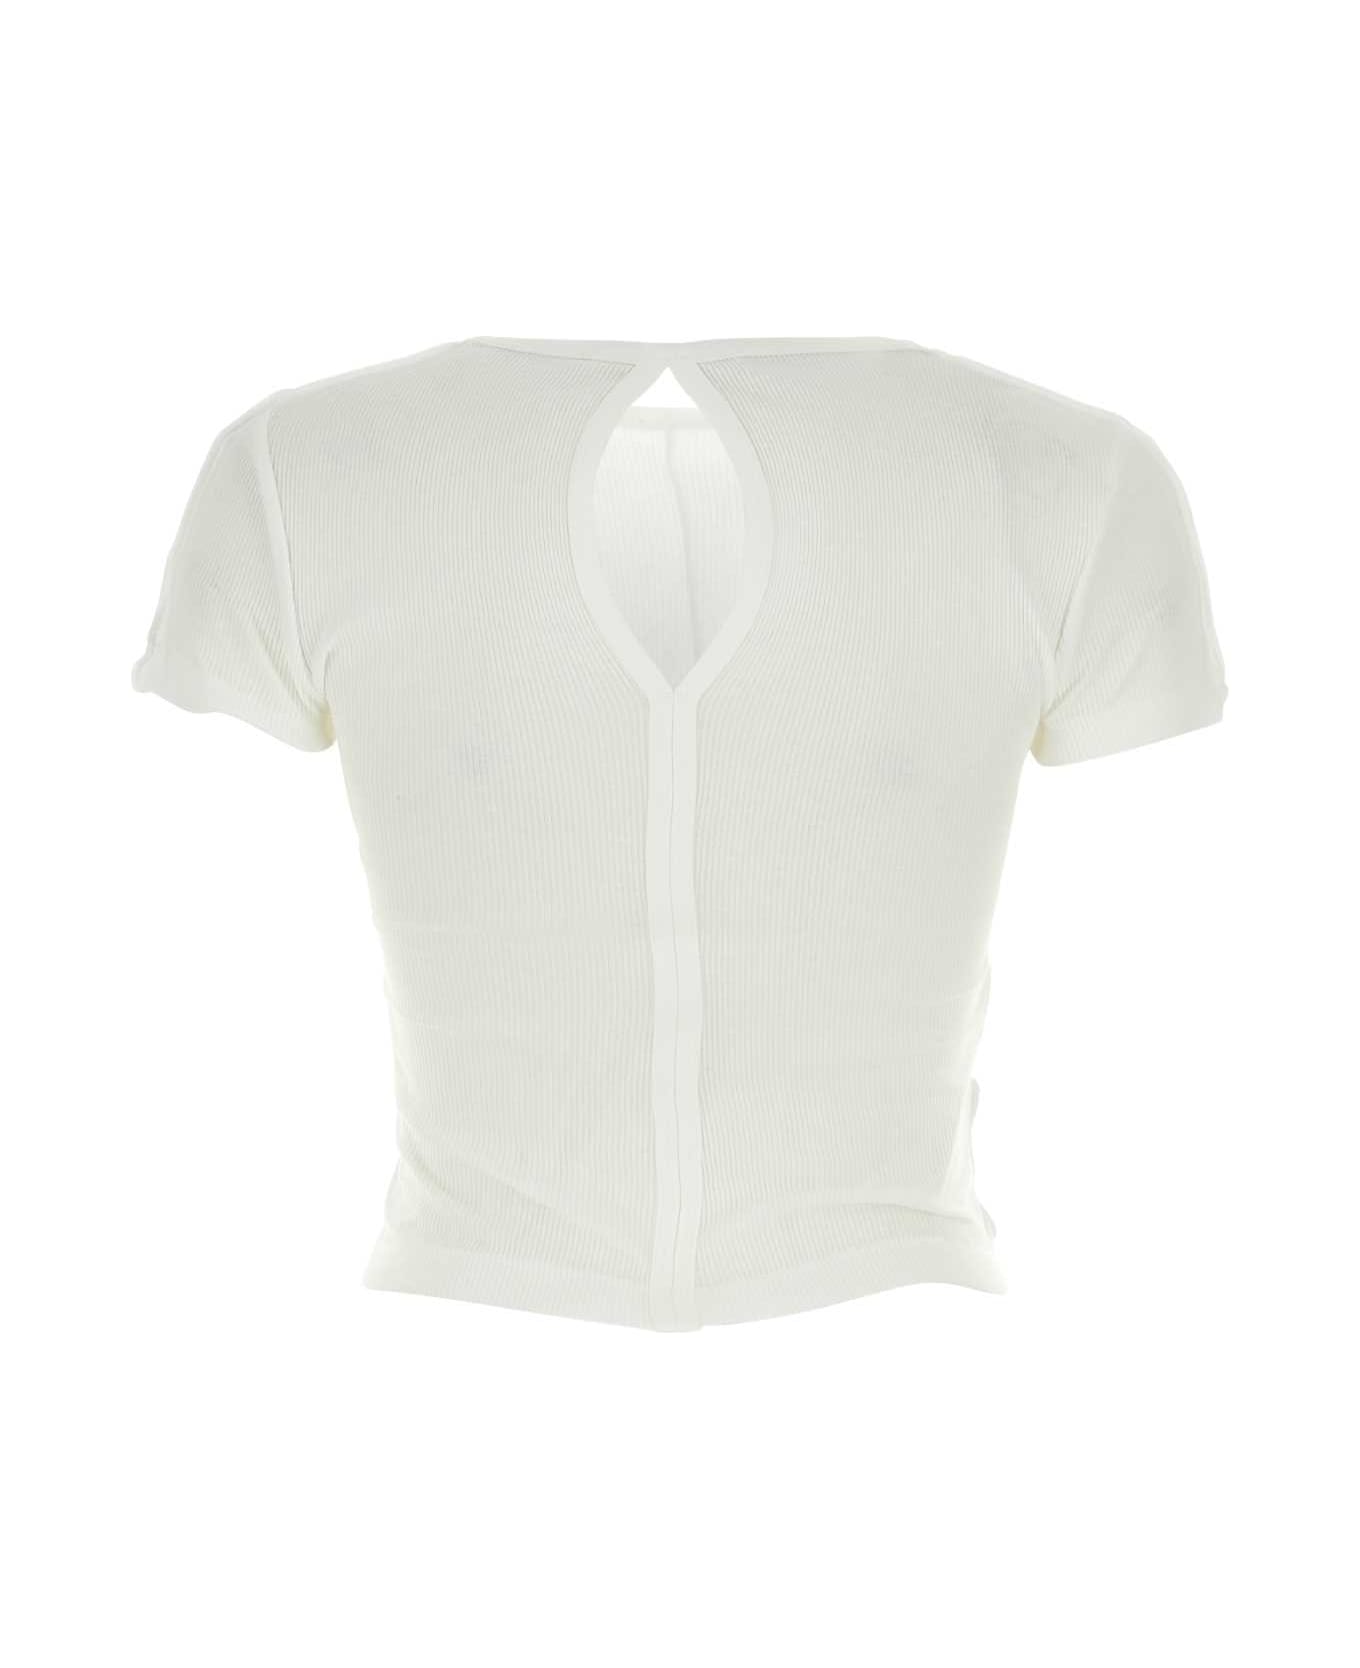 Helmut Lang White Cotton Top - White Tシャツ